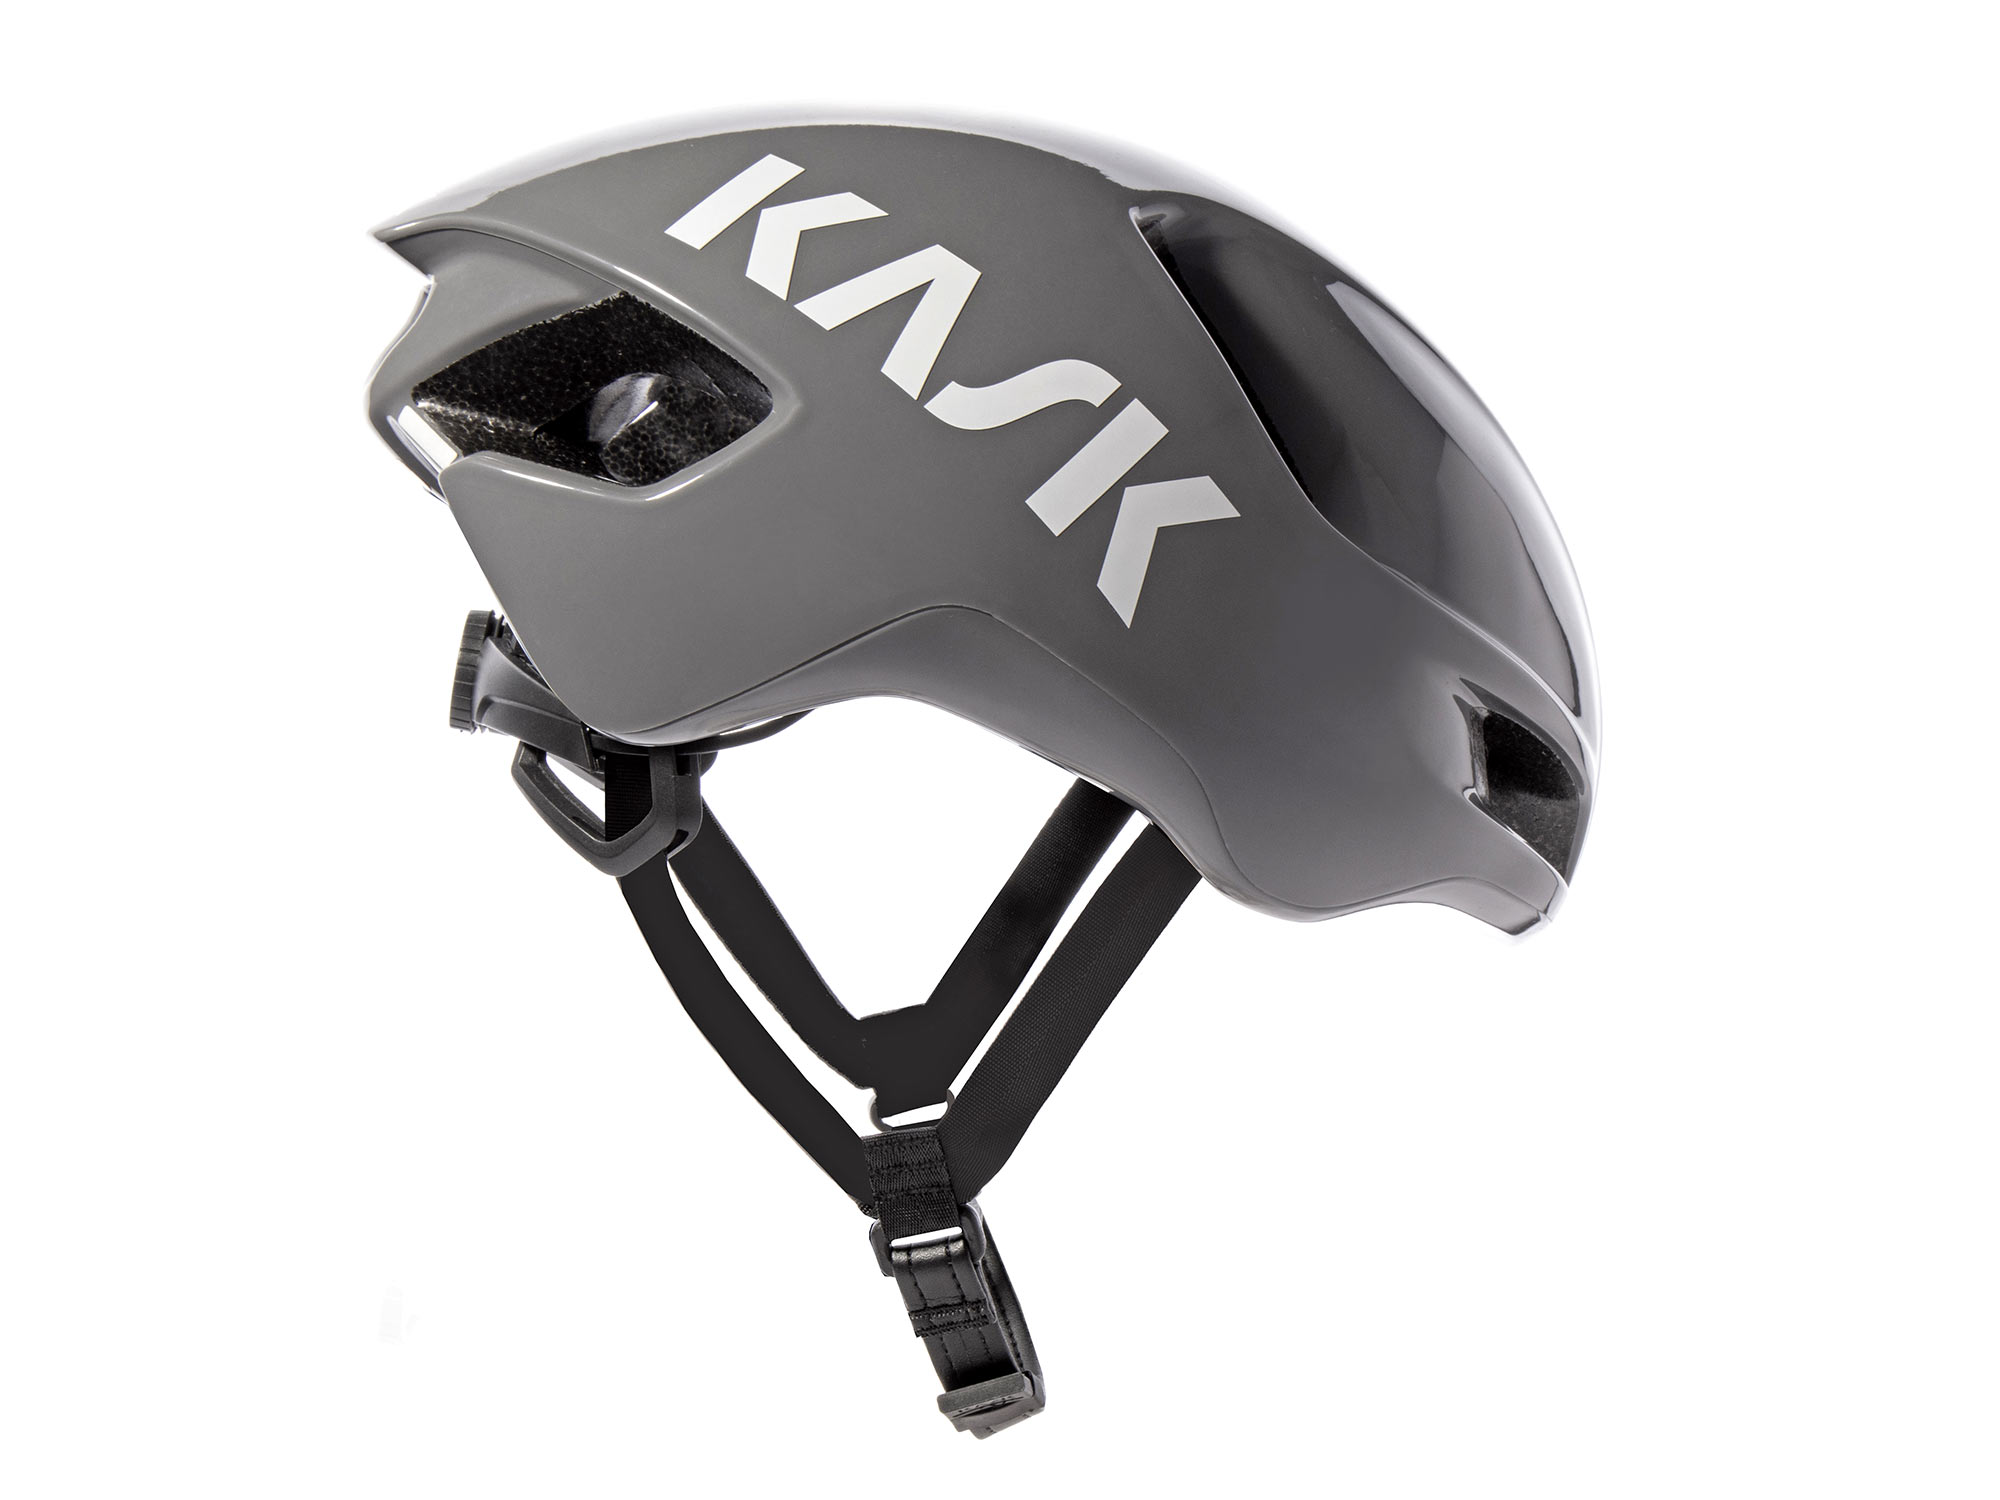 Kask Utopia Y Upgrades Popular Aero Road Helmet With Improved Fit 